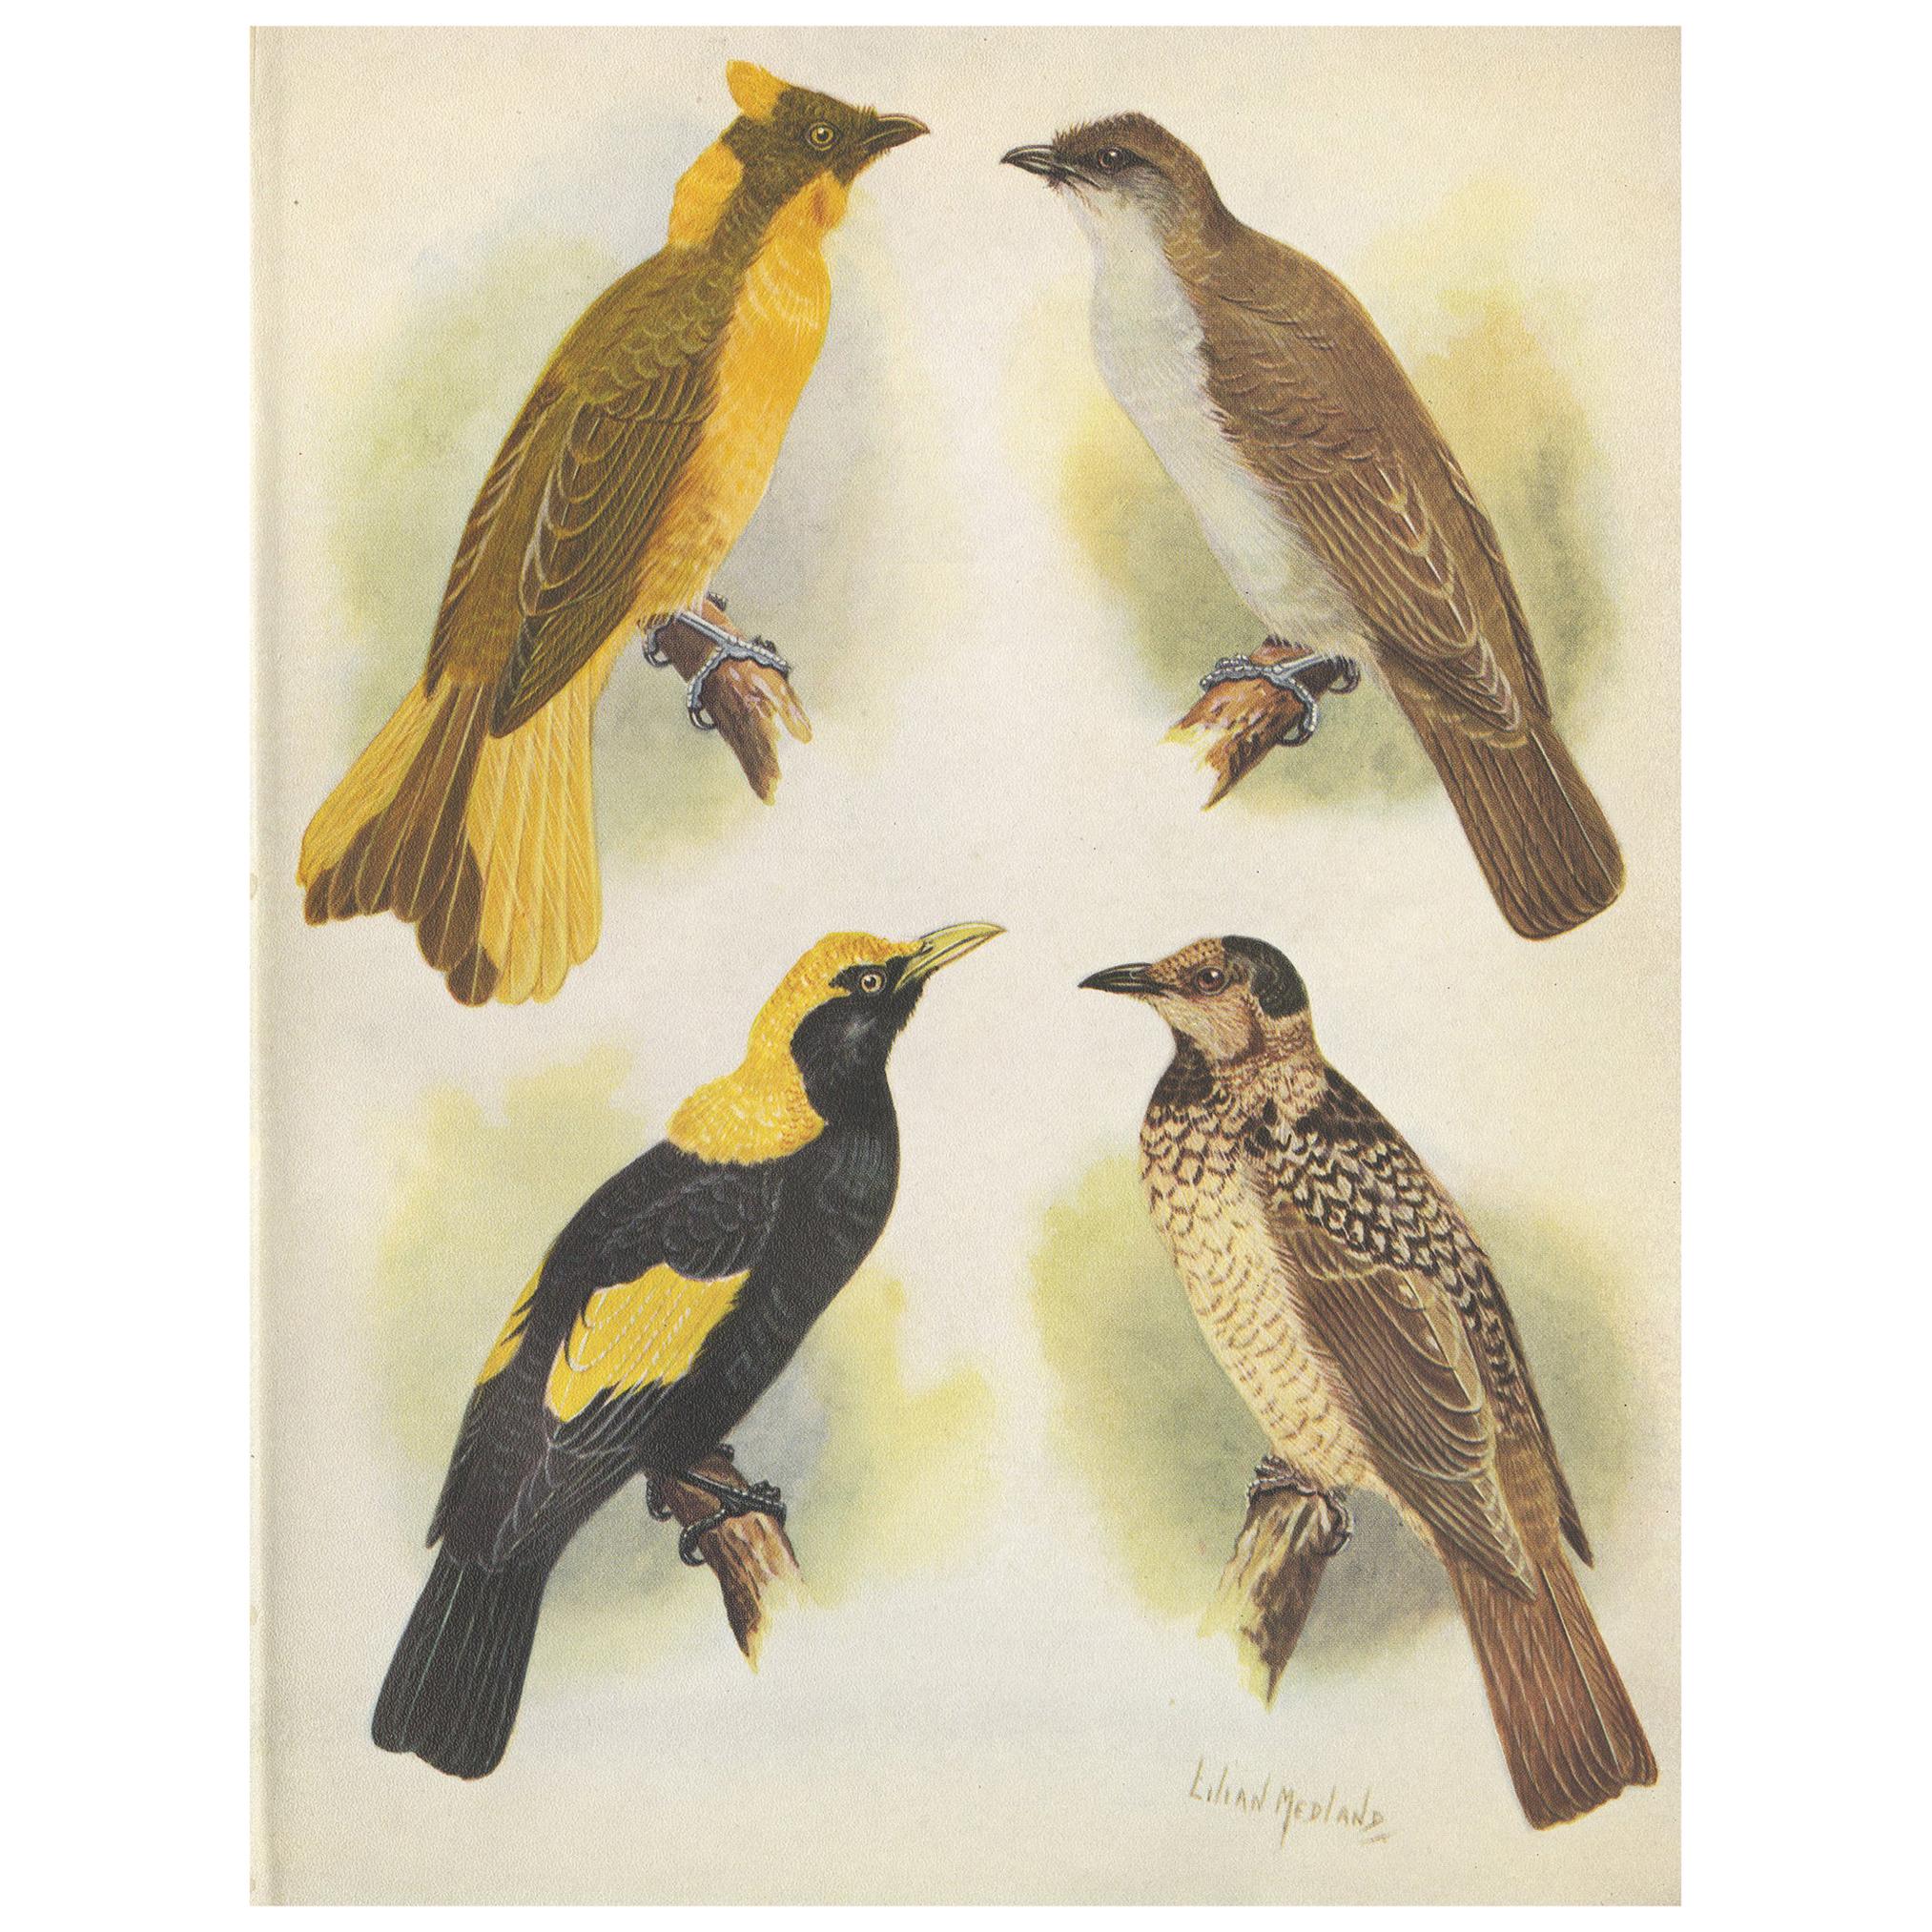 Antique Print of the Newton's Bower-Bird & the Regent Bird, 1950